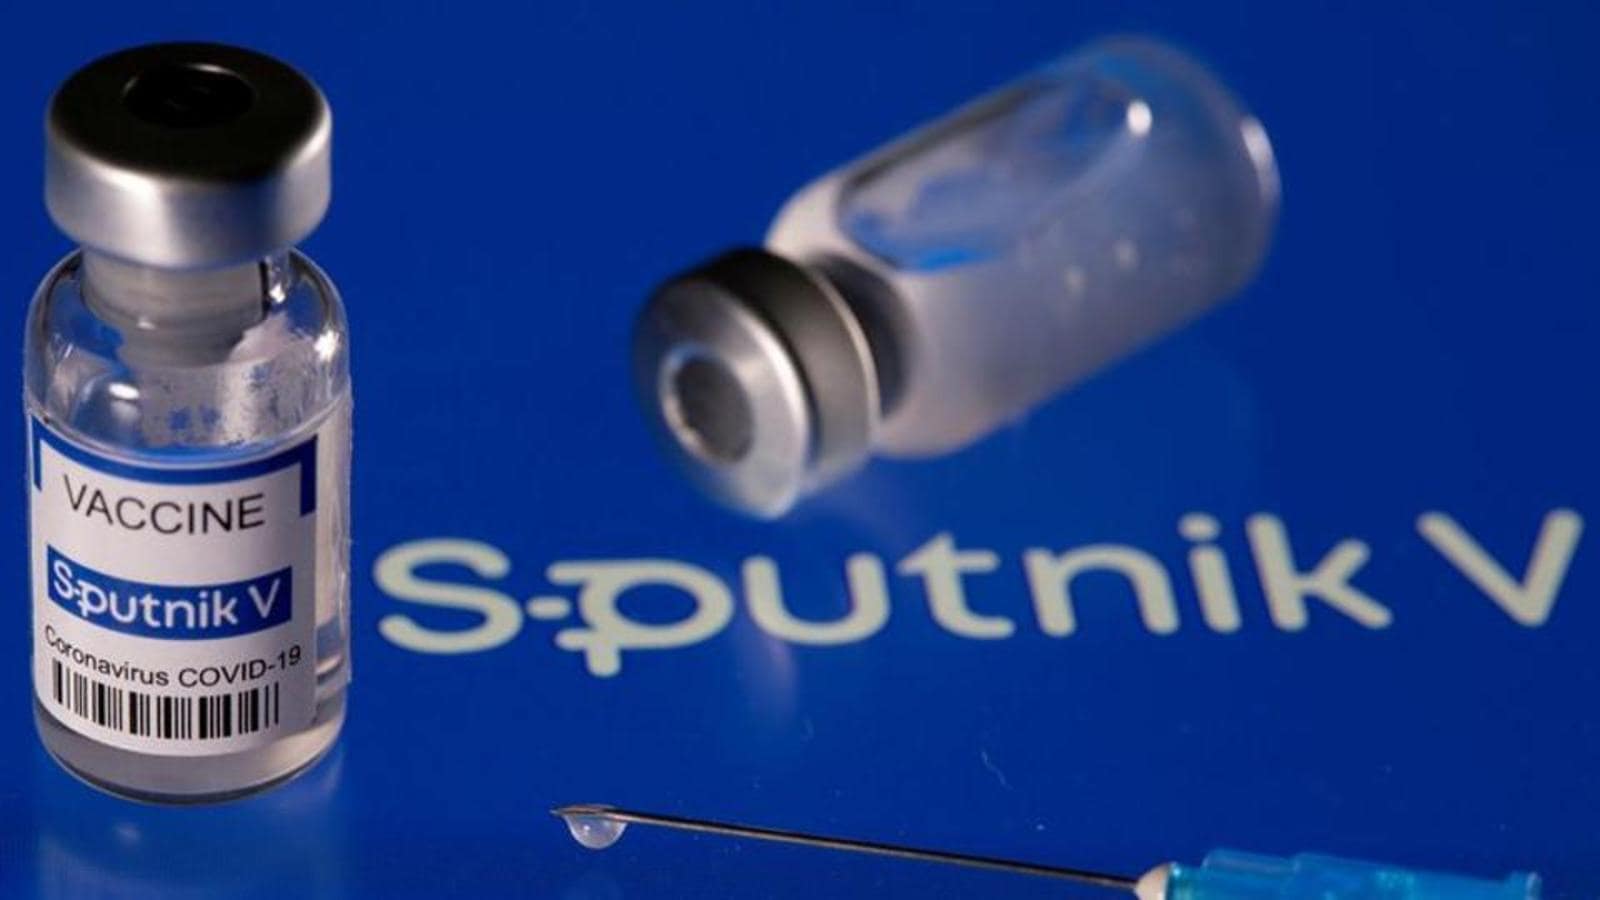 Covid-19: Panacea Biotech supplies 1 million Sputnik V doses | Latest News India - Hindustan Times